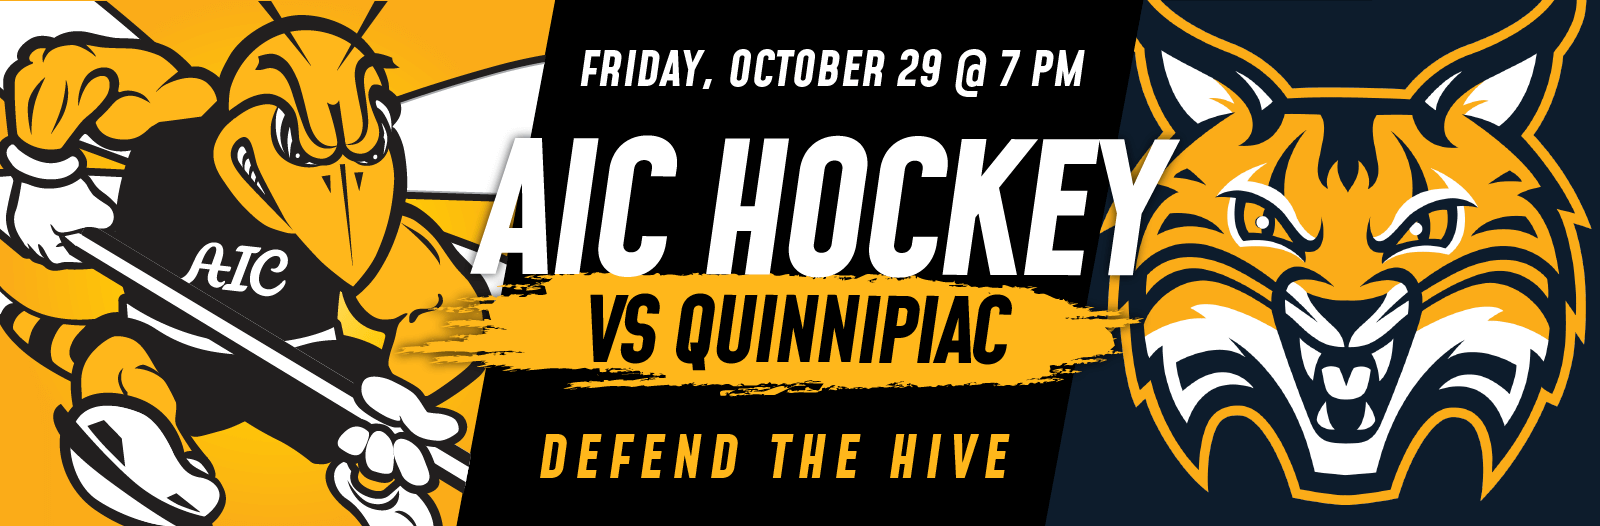 AIC Men's Hockey vs. Quinnipiac University